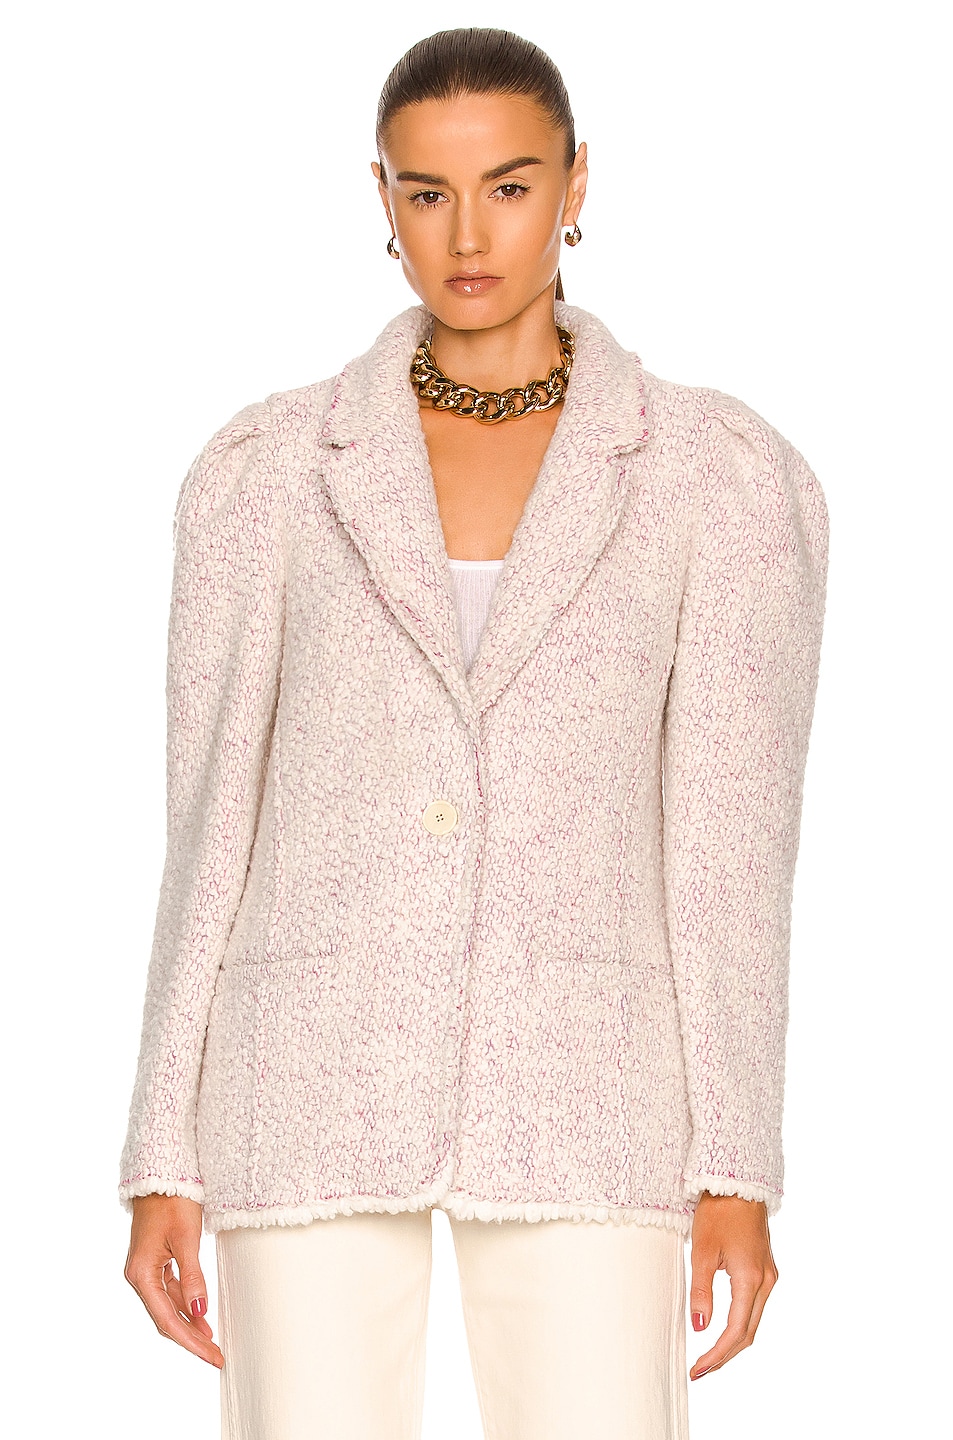 Isabel Marant Iladomo Jacket in Light Pink | FWRD